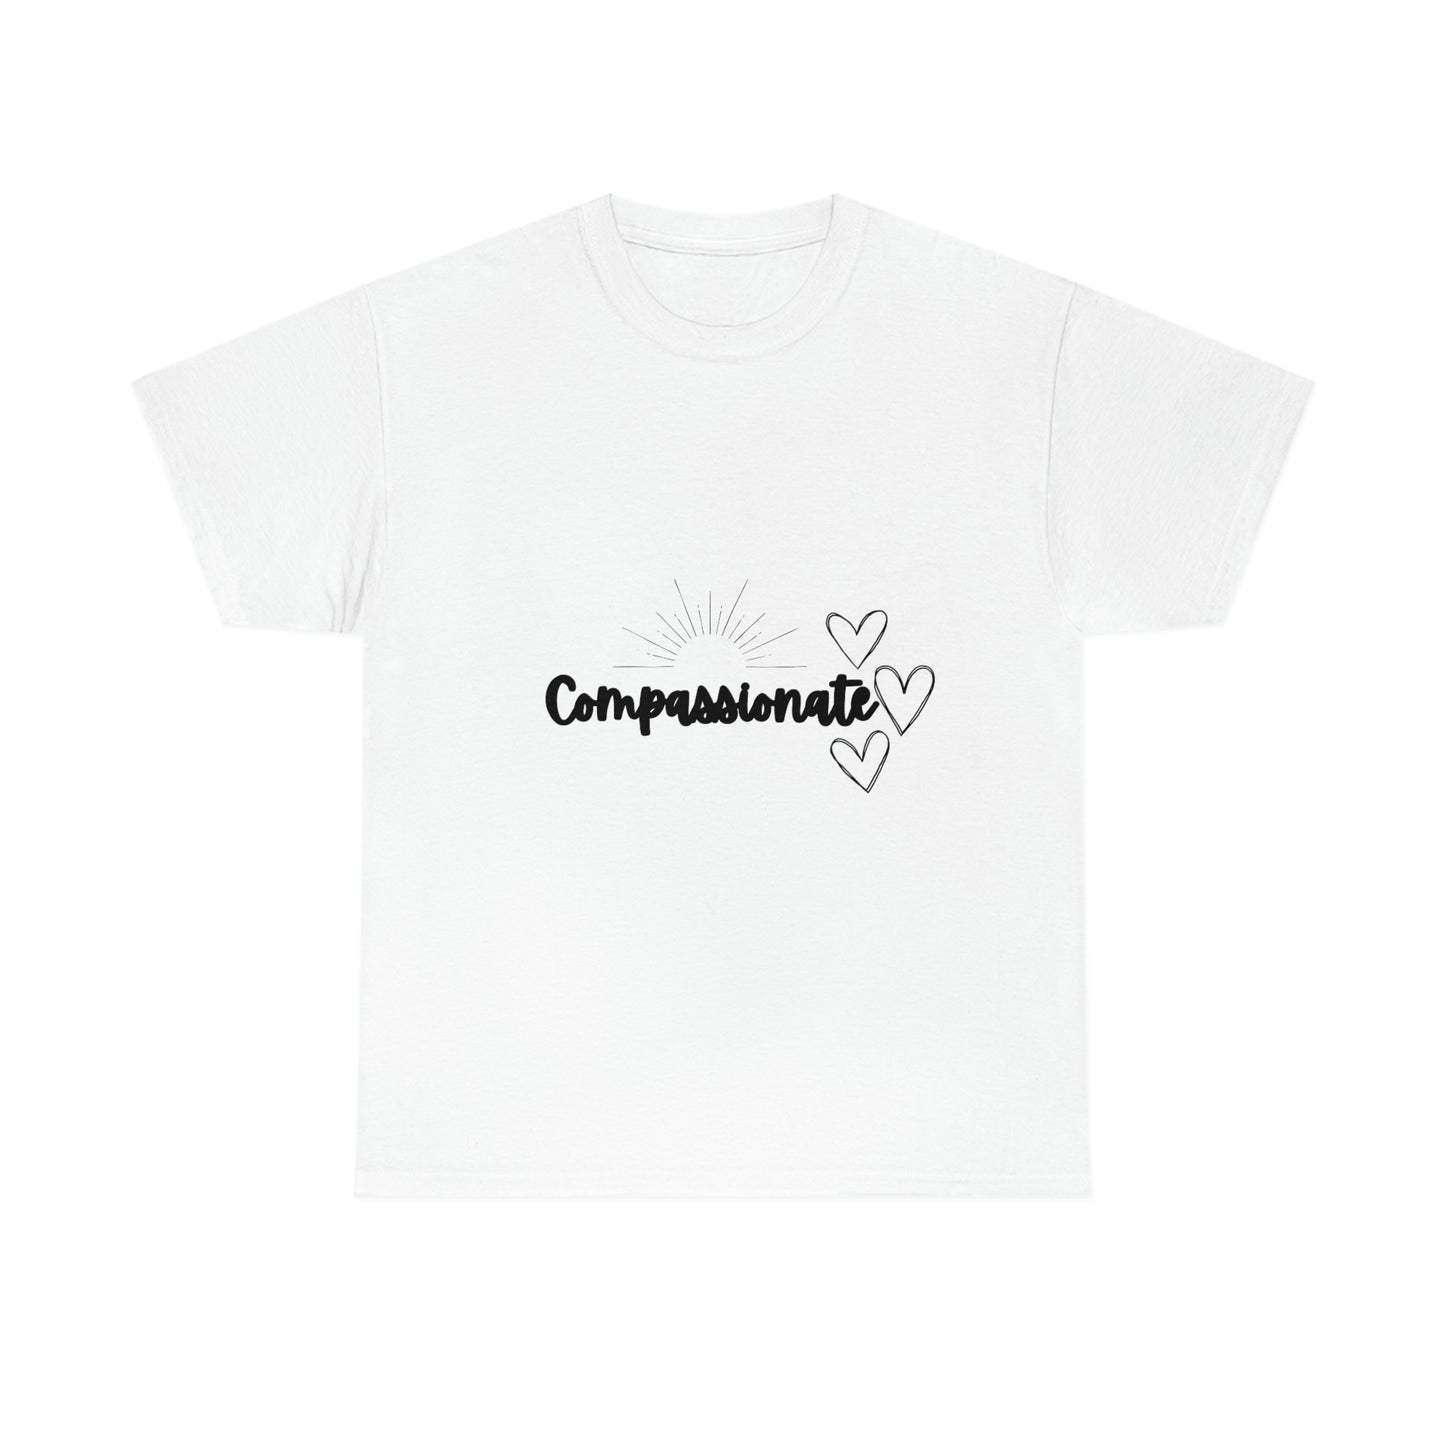 Compassionate T-shirt